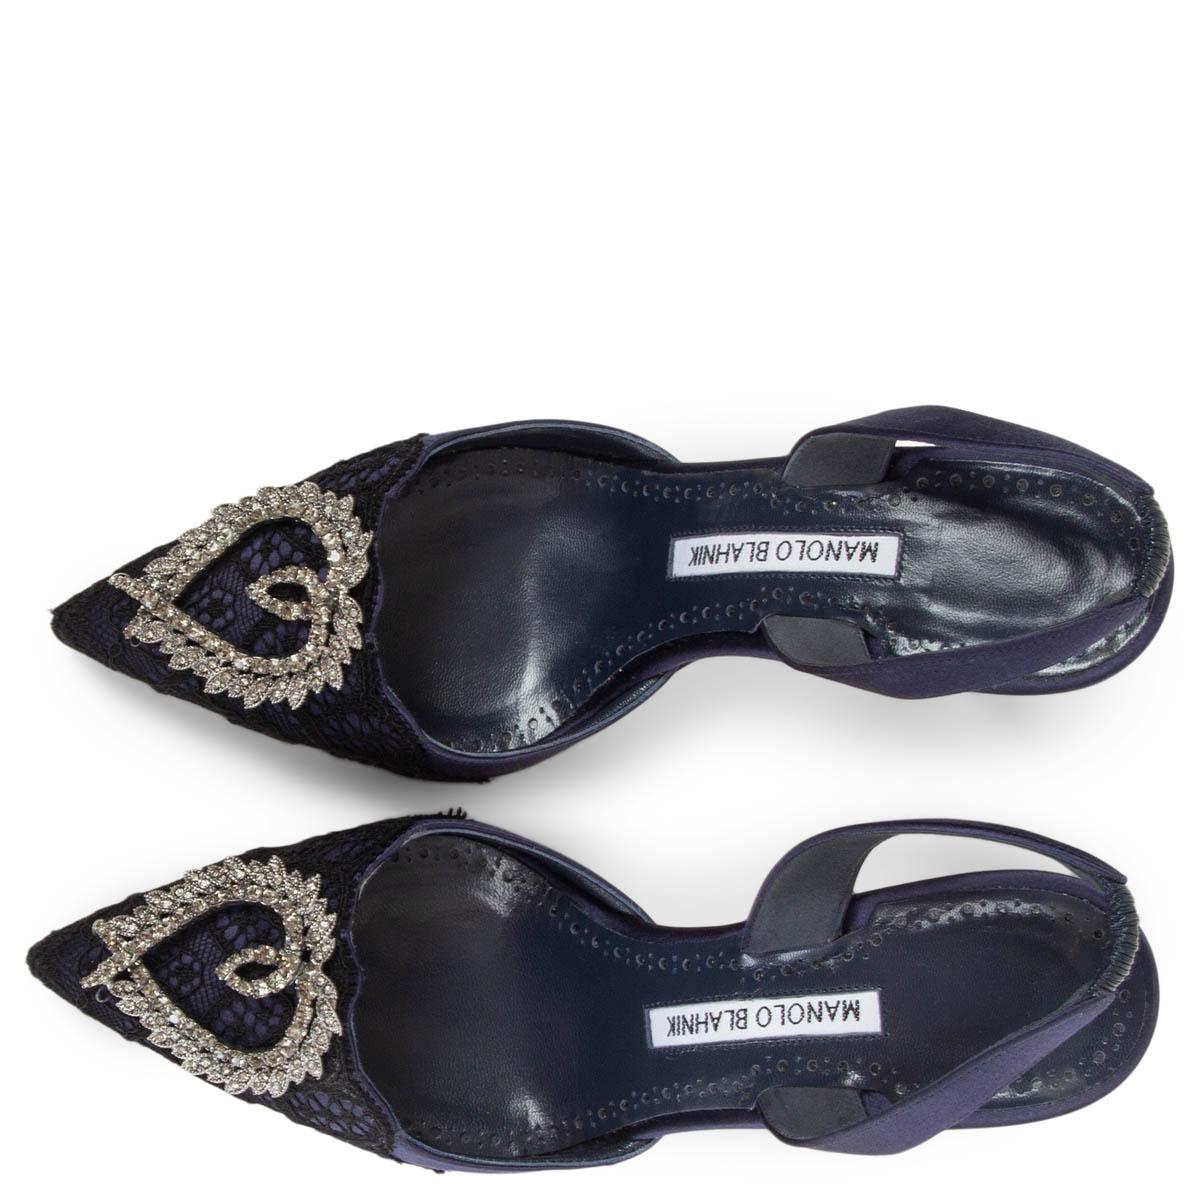 Black MANOLO BLAHNIK navy blue SATIN ANTIPHONA 90 CRYSTAL Slingbacks Pumps Shoes 37.5